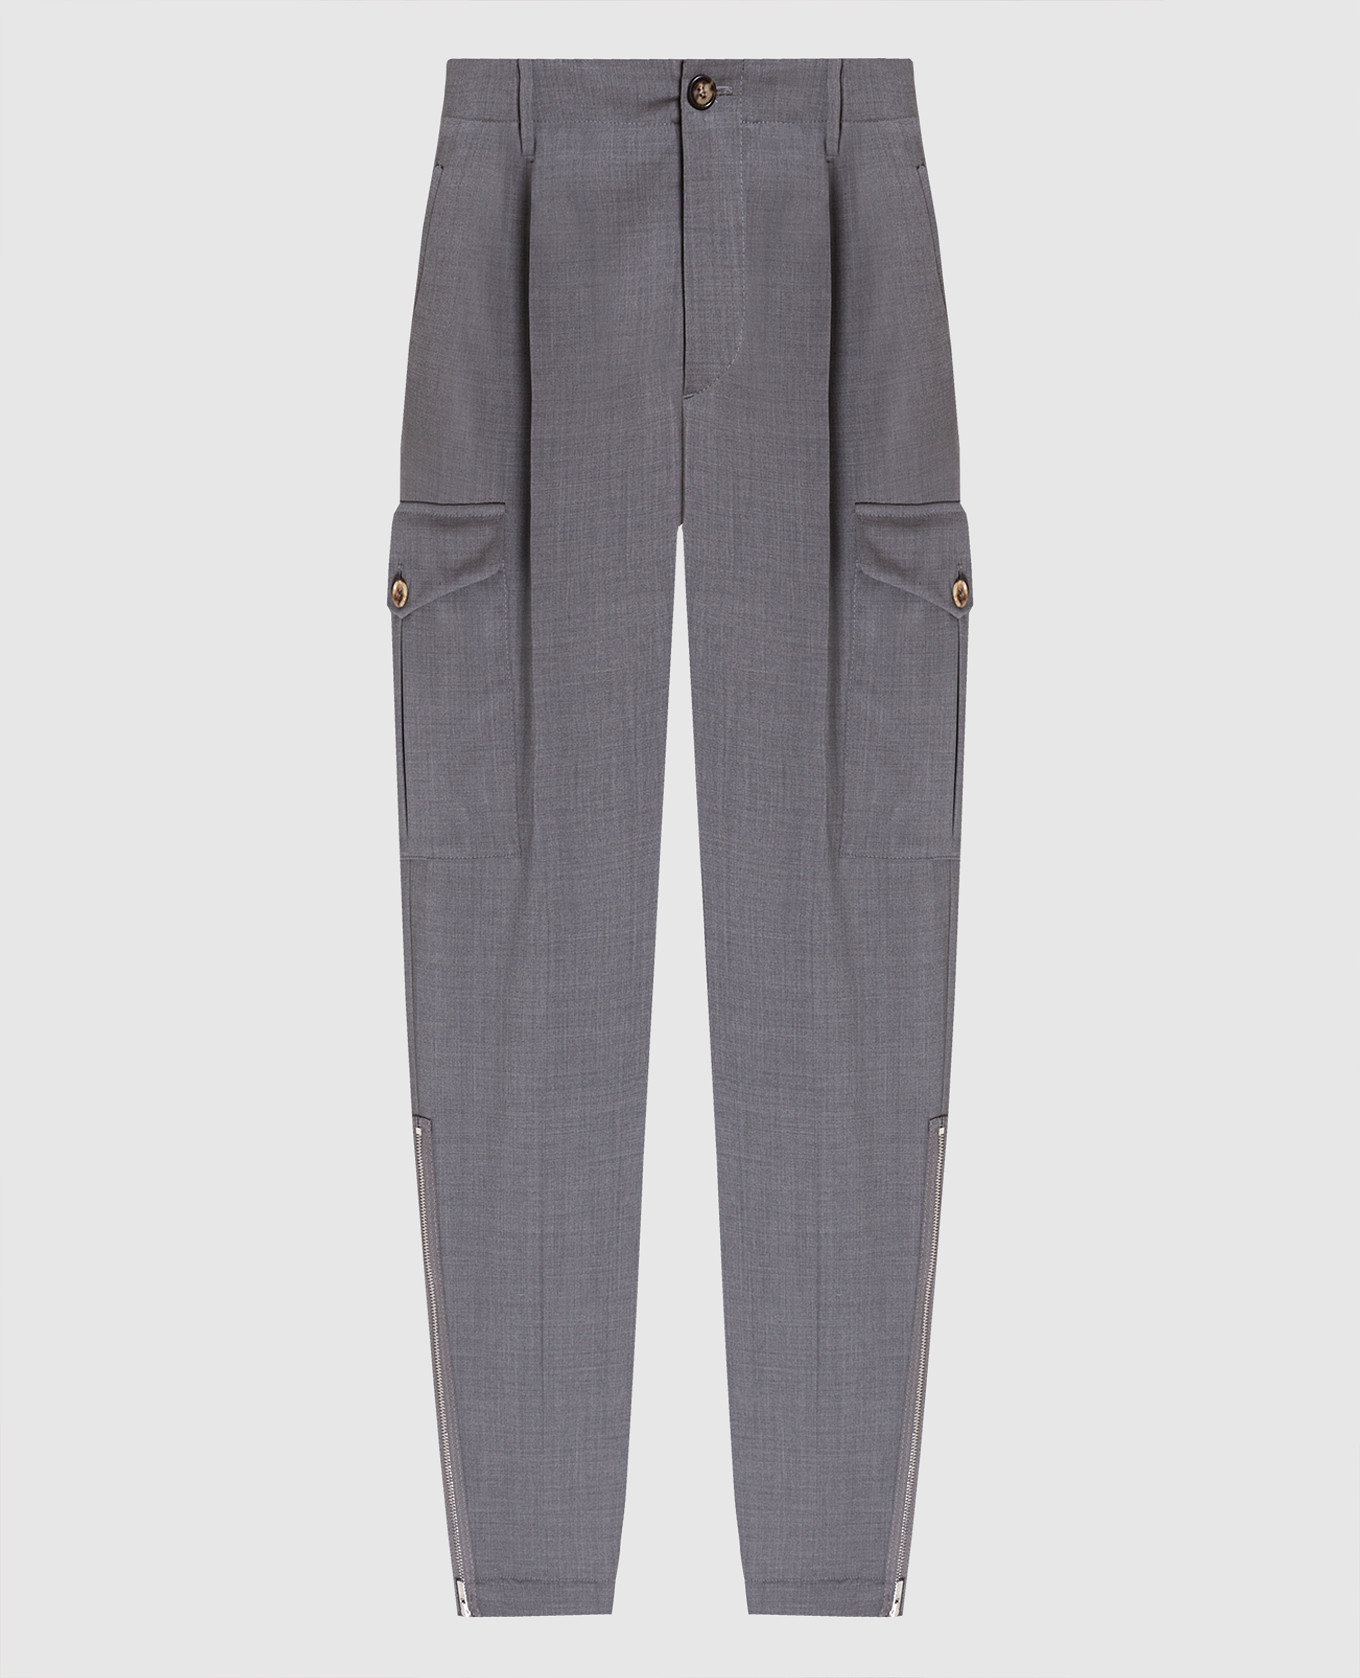 Gray wool cargo pants